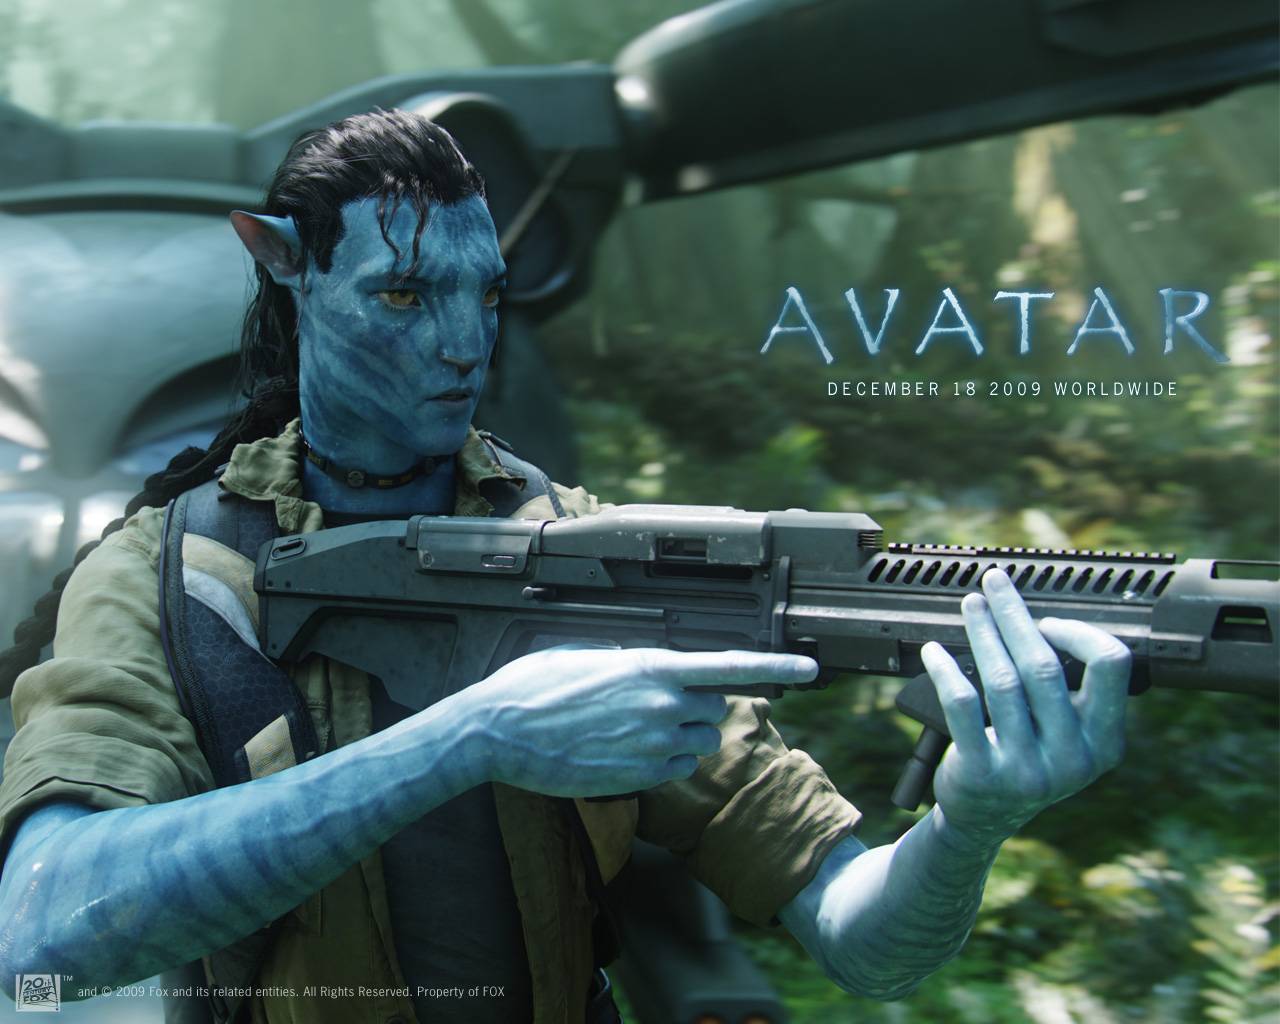 Fond d'ecran Avatar arme